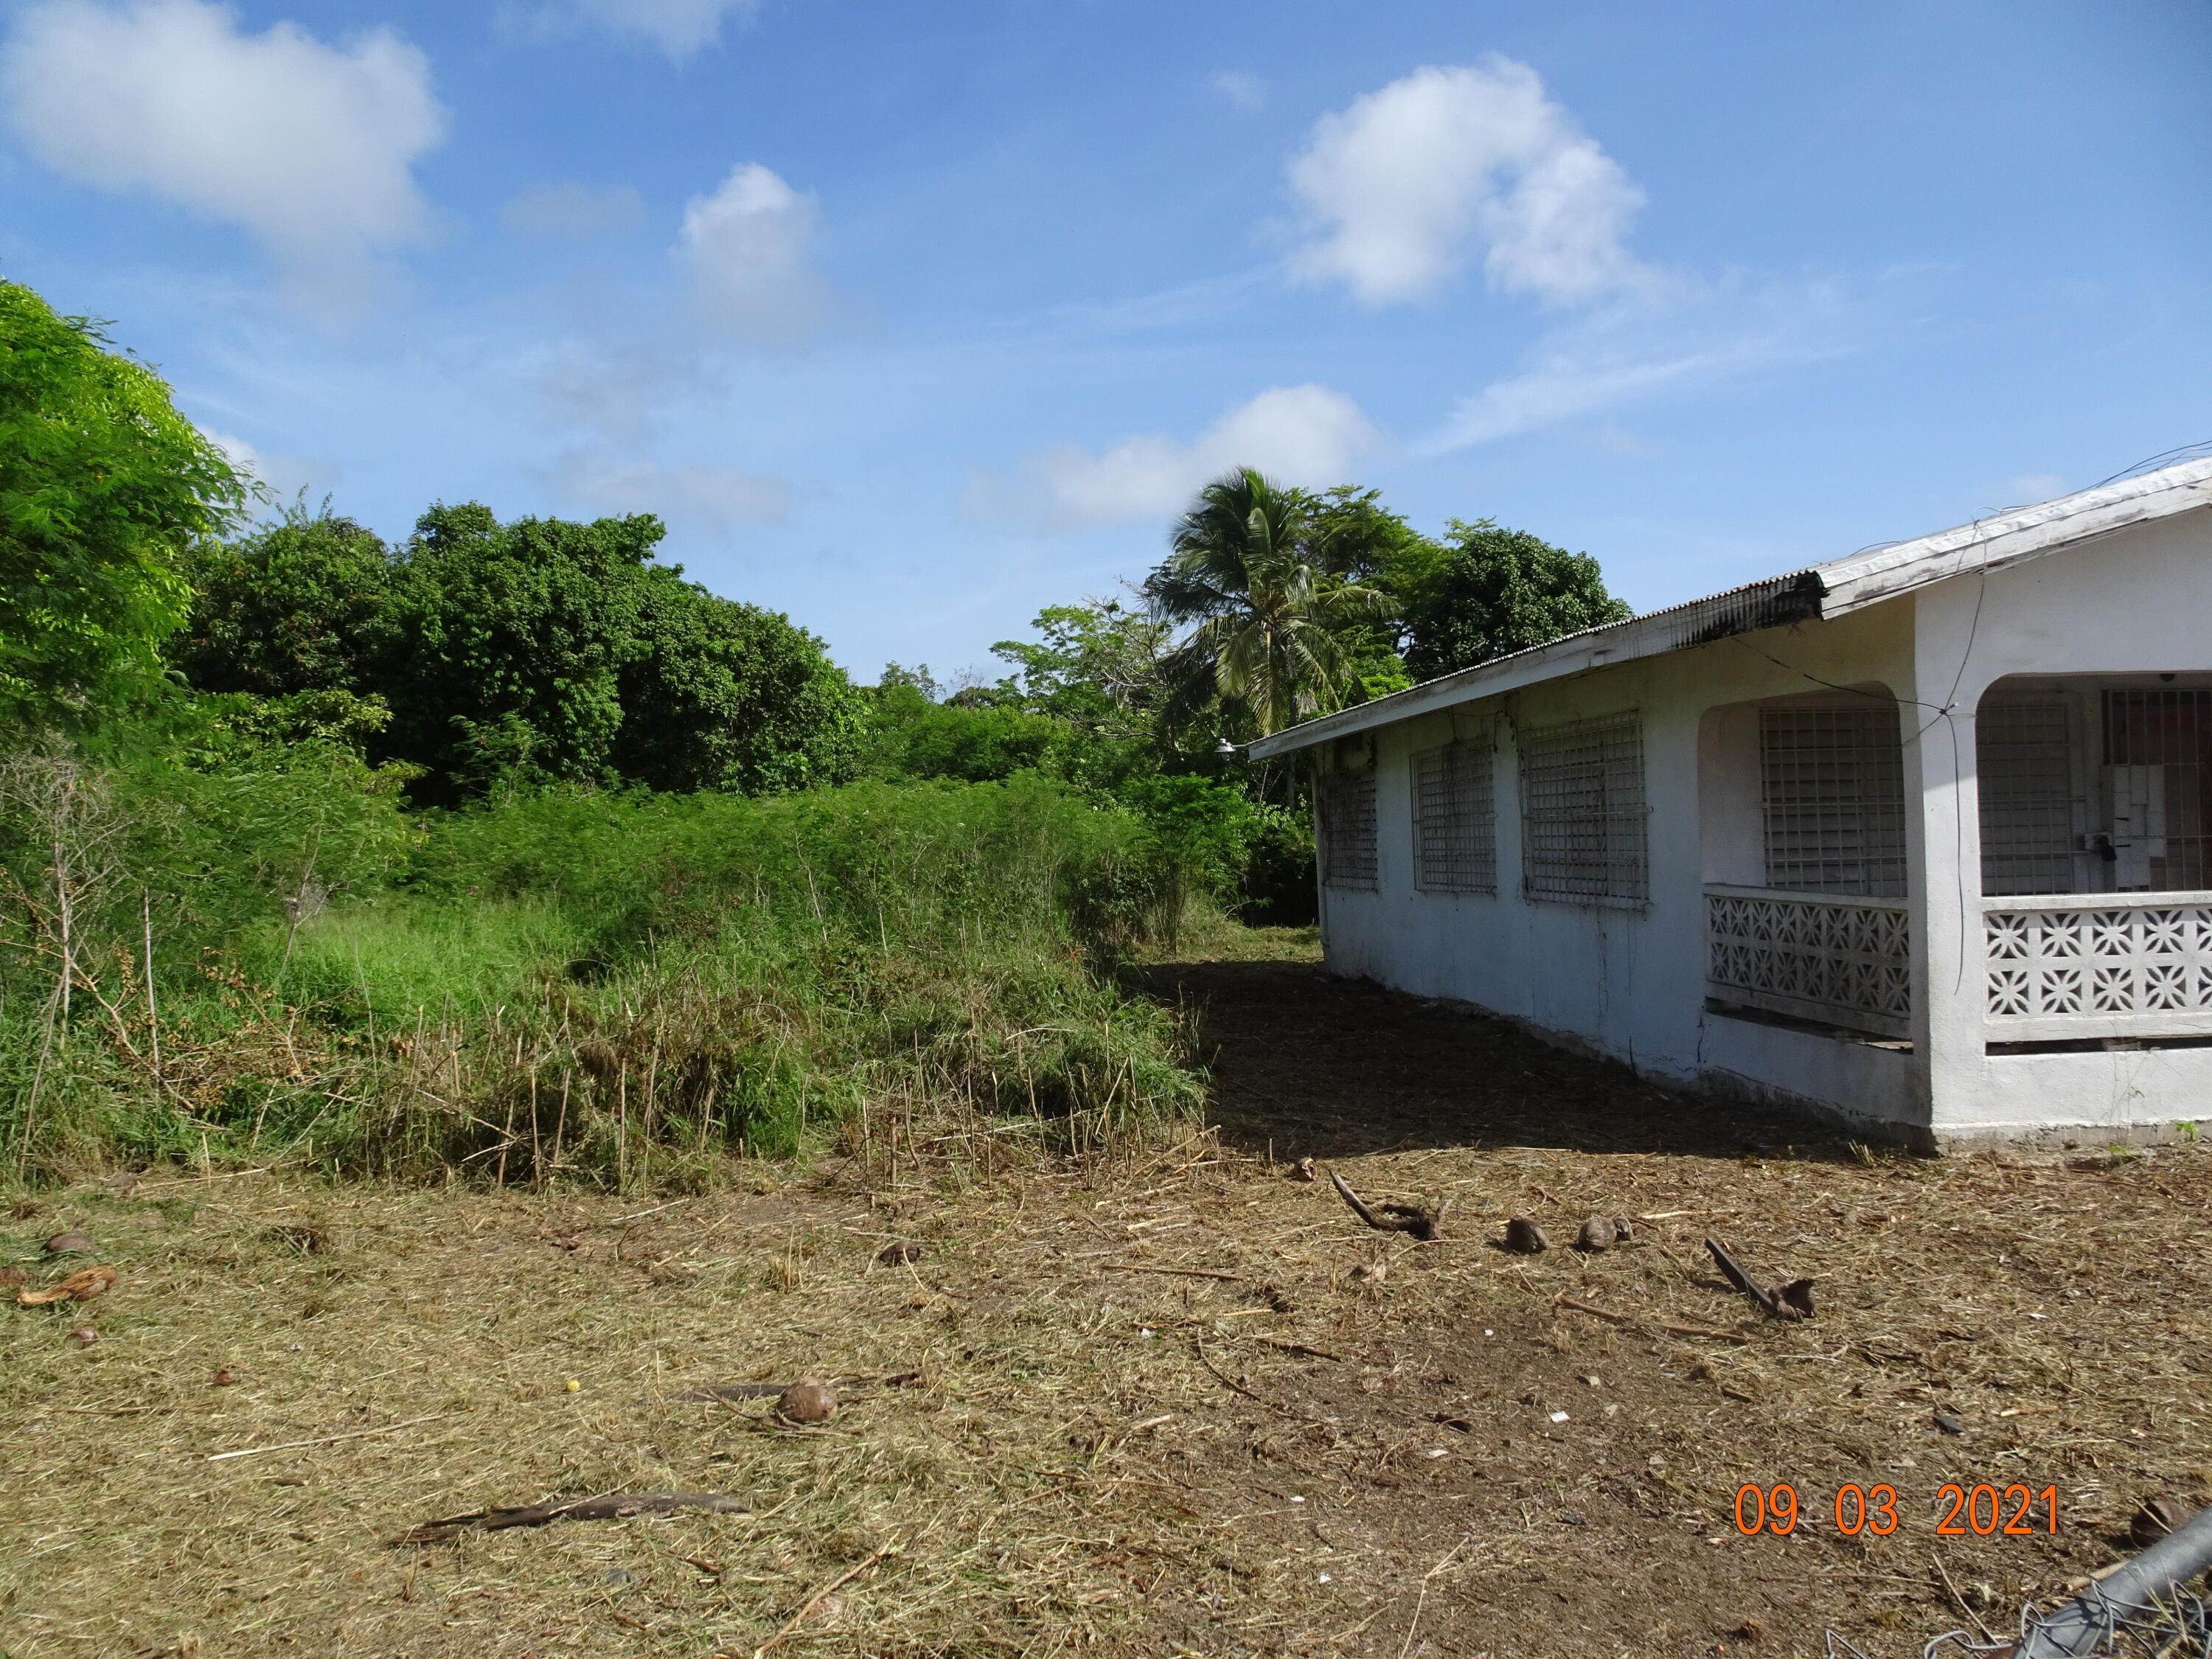 3. Single Family Homes for Sale at 221 Glynn KI St Croix, Virgin Islands 00850 United States Virgin Islands